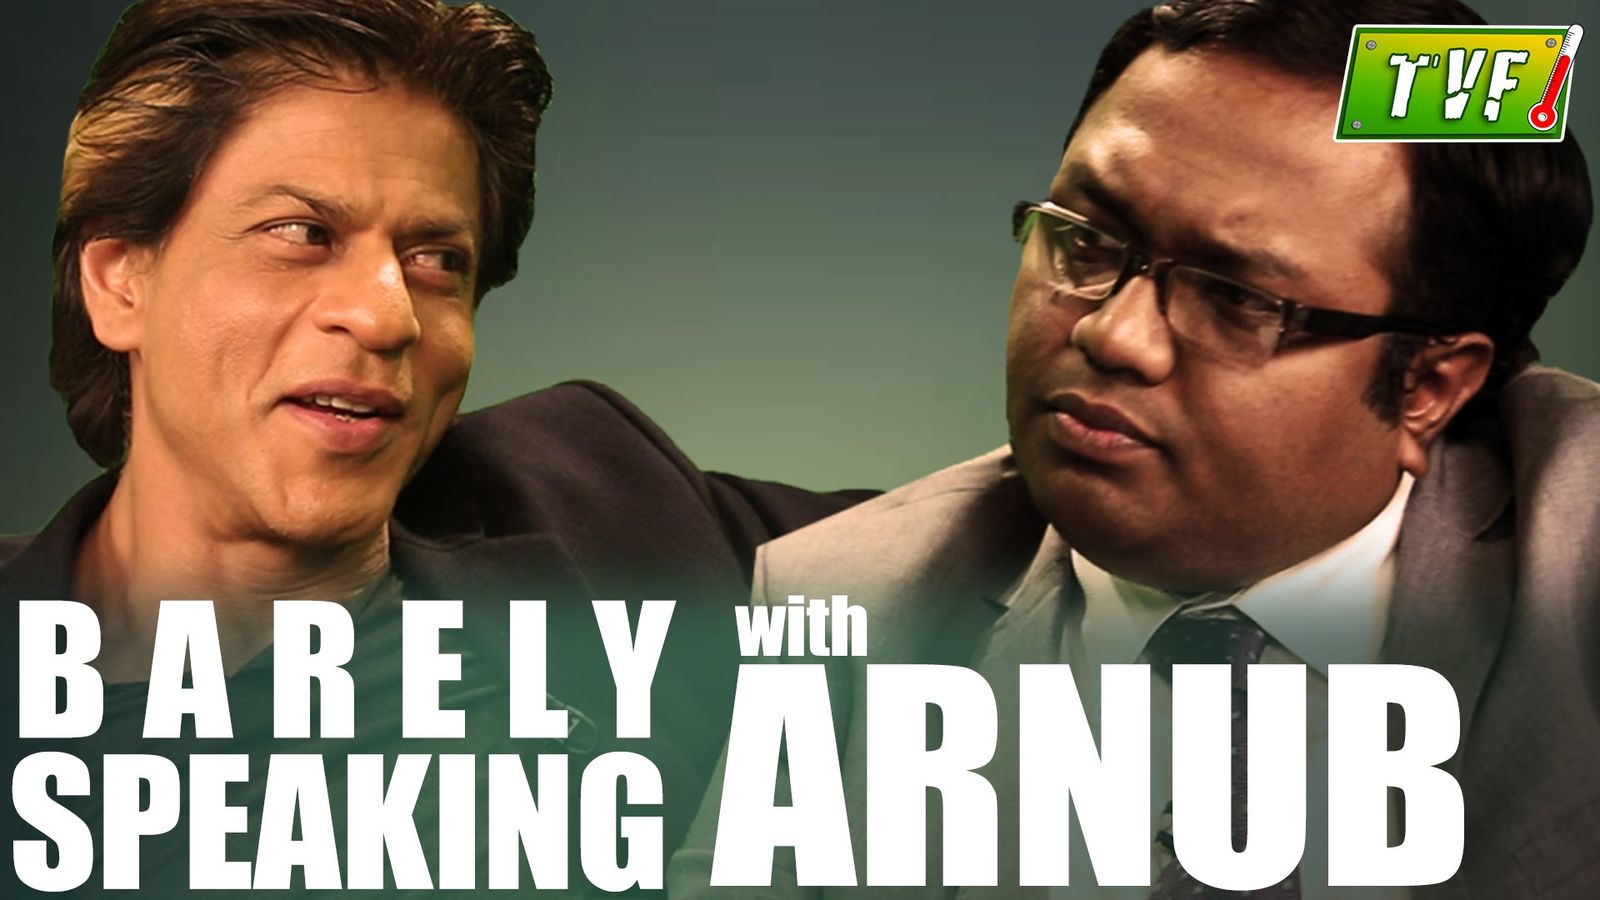 Shah Rukh Khan Meets "Arnub Goswami" - Video of the Day